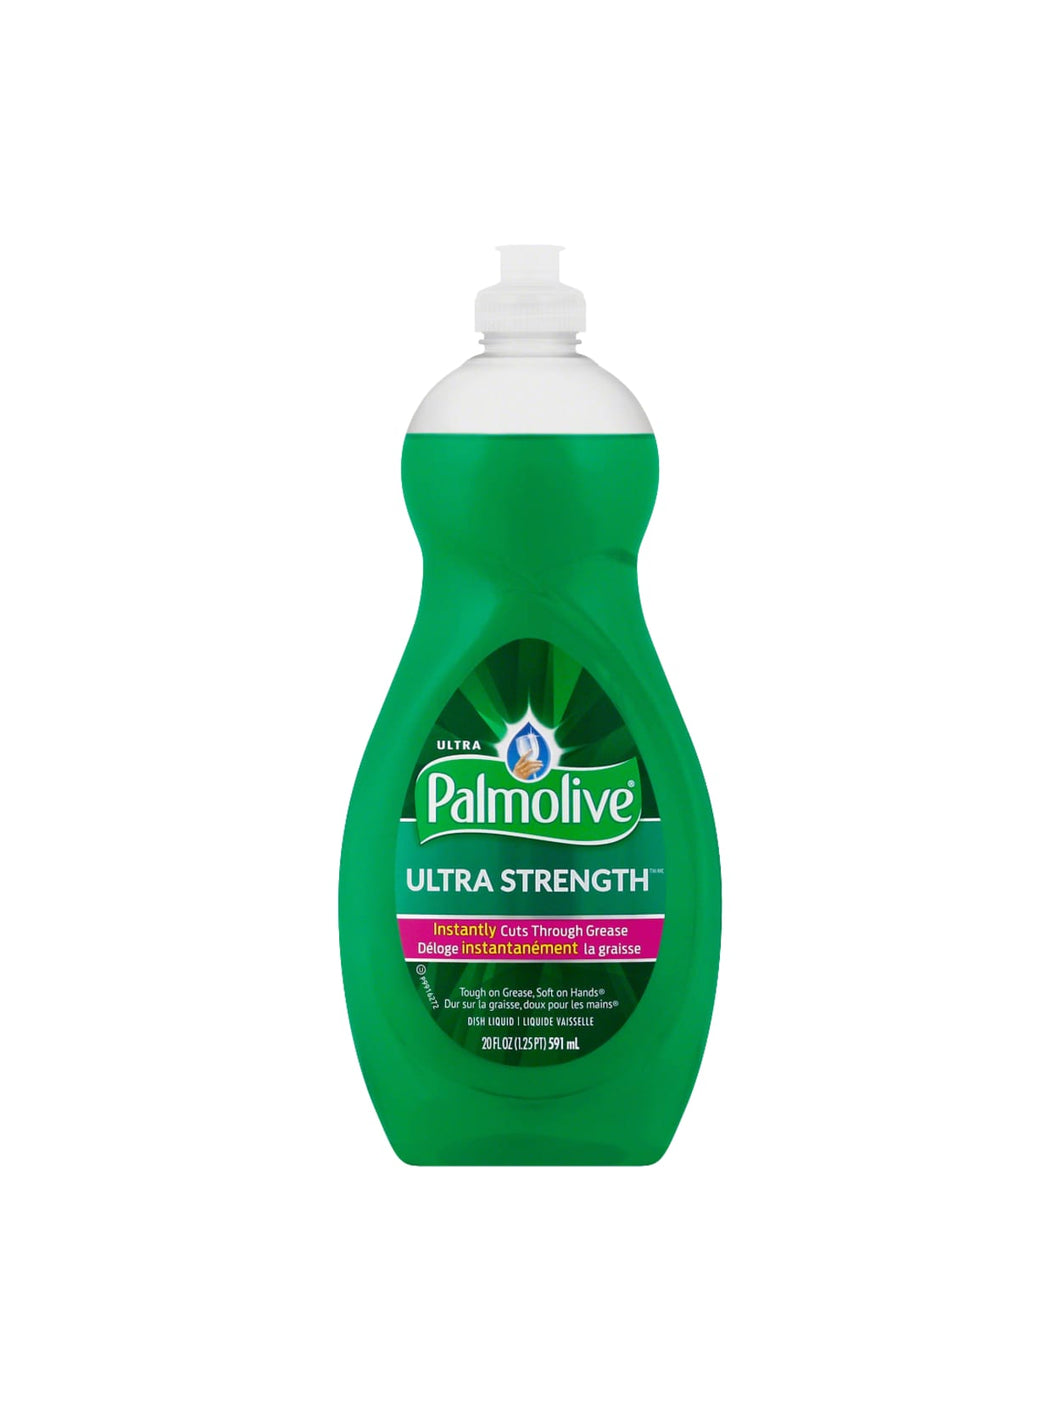 Palmolive Original Ultra Strength Liquid Dish Soap, Original Scent, 20 fl oz